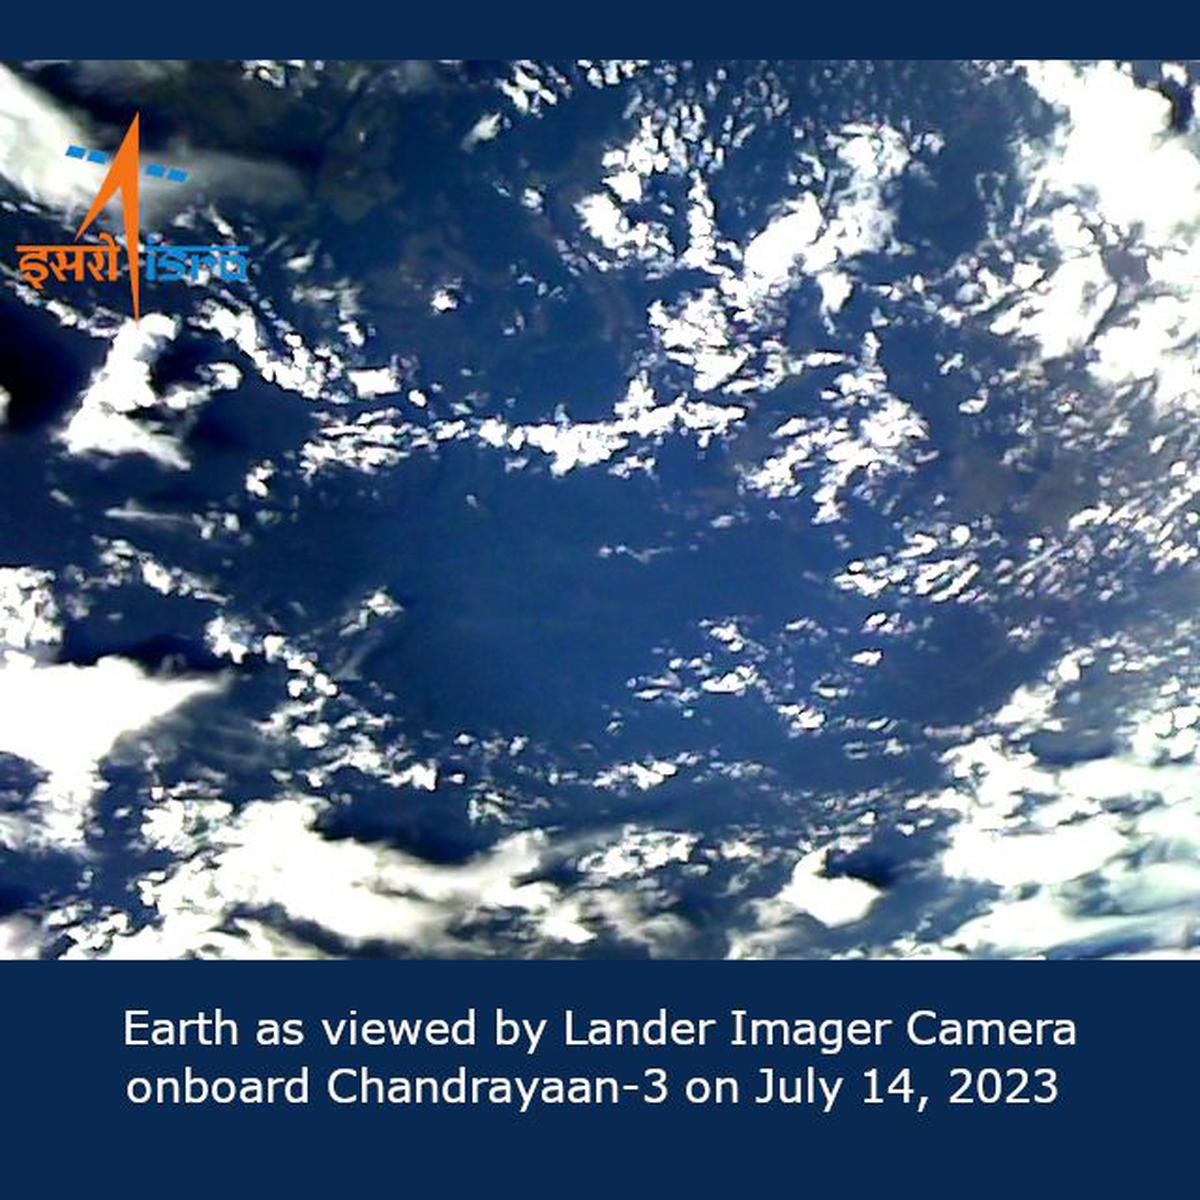 Chandrayaan-3 mission: Earth viewed by Lander Imager (LI) Camera on July 14, 2023.